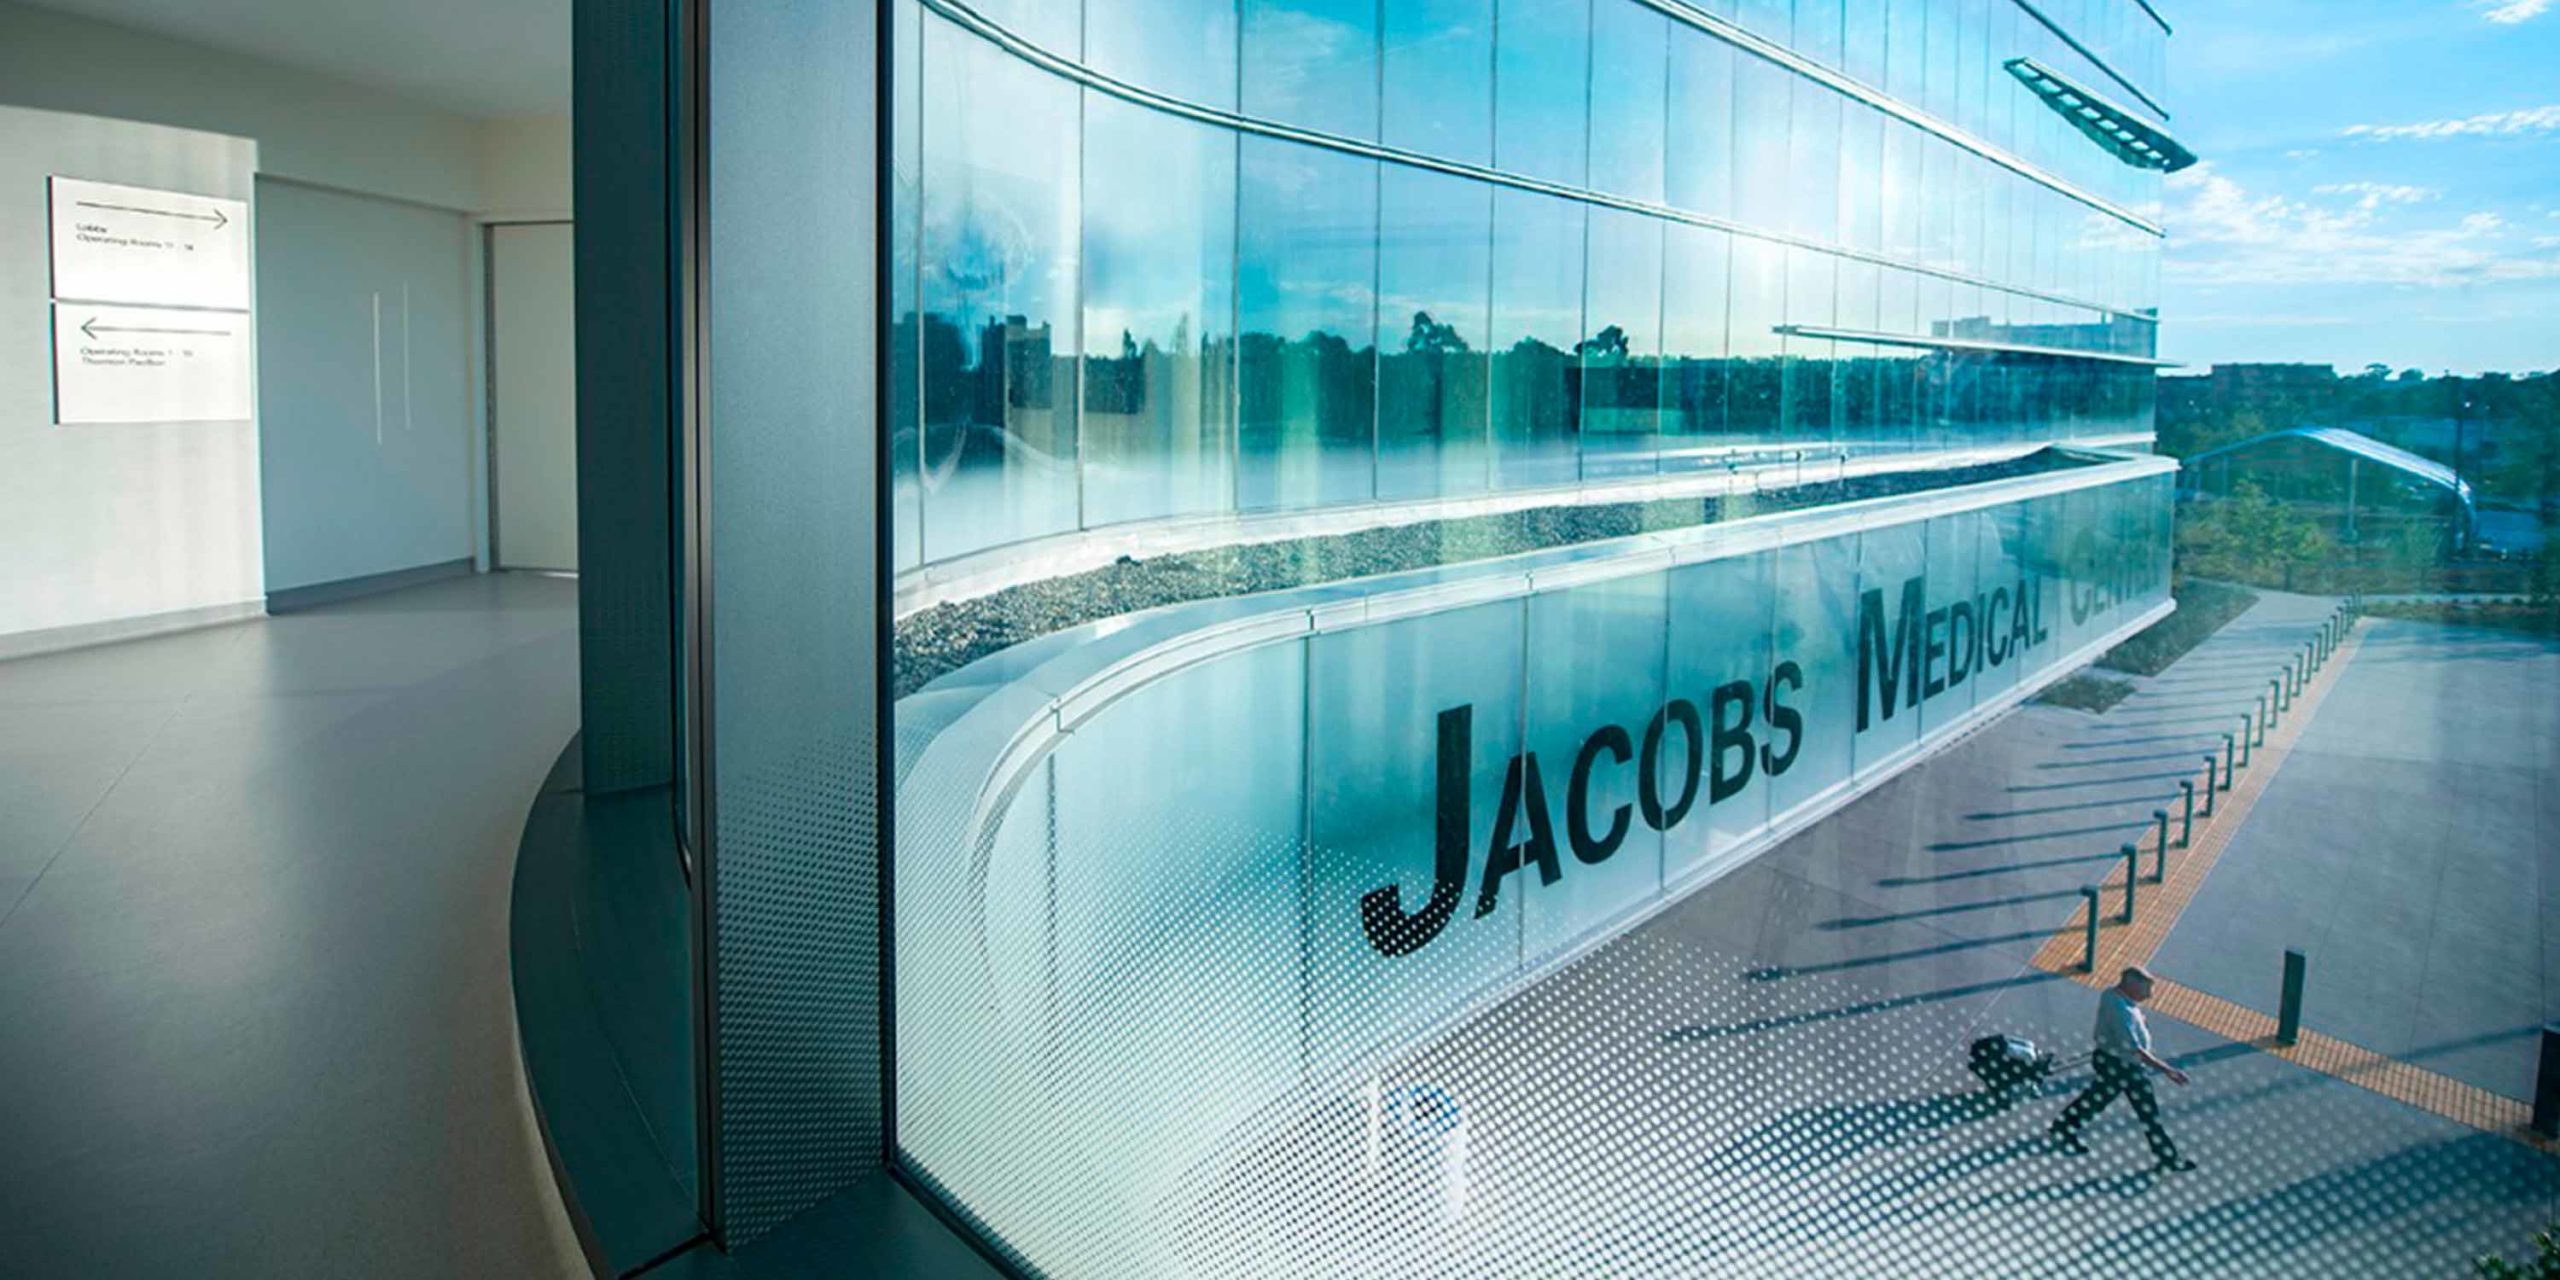 University of California San Diego: Jacobs Medical Center header image #8